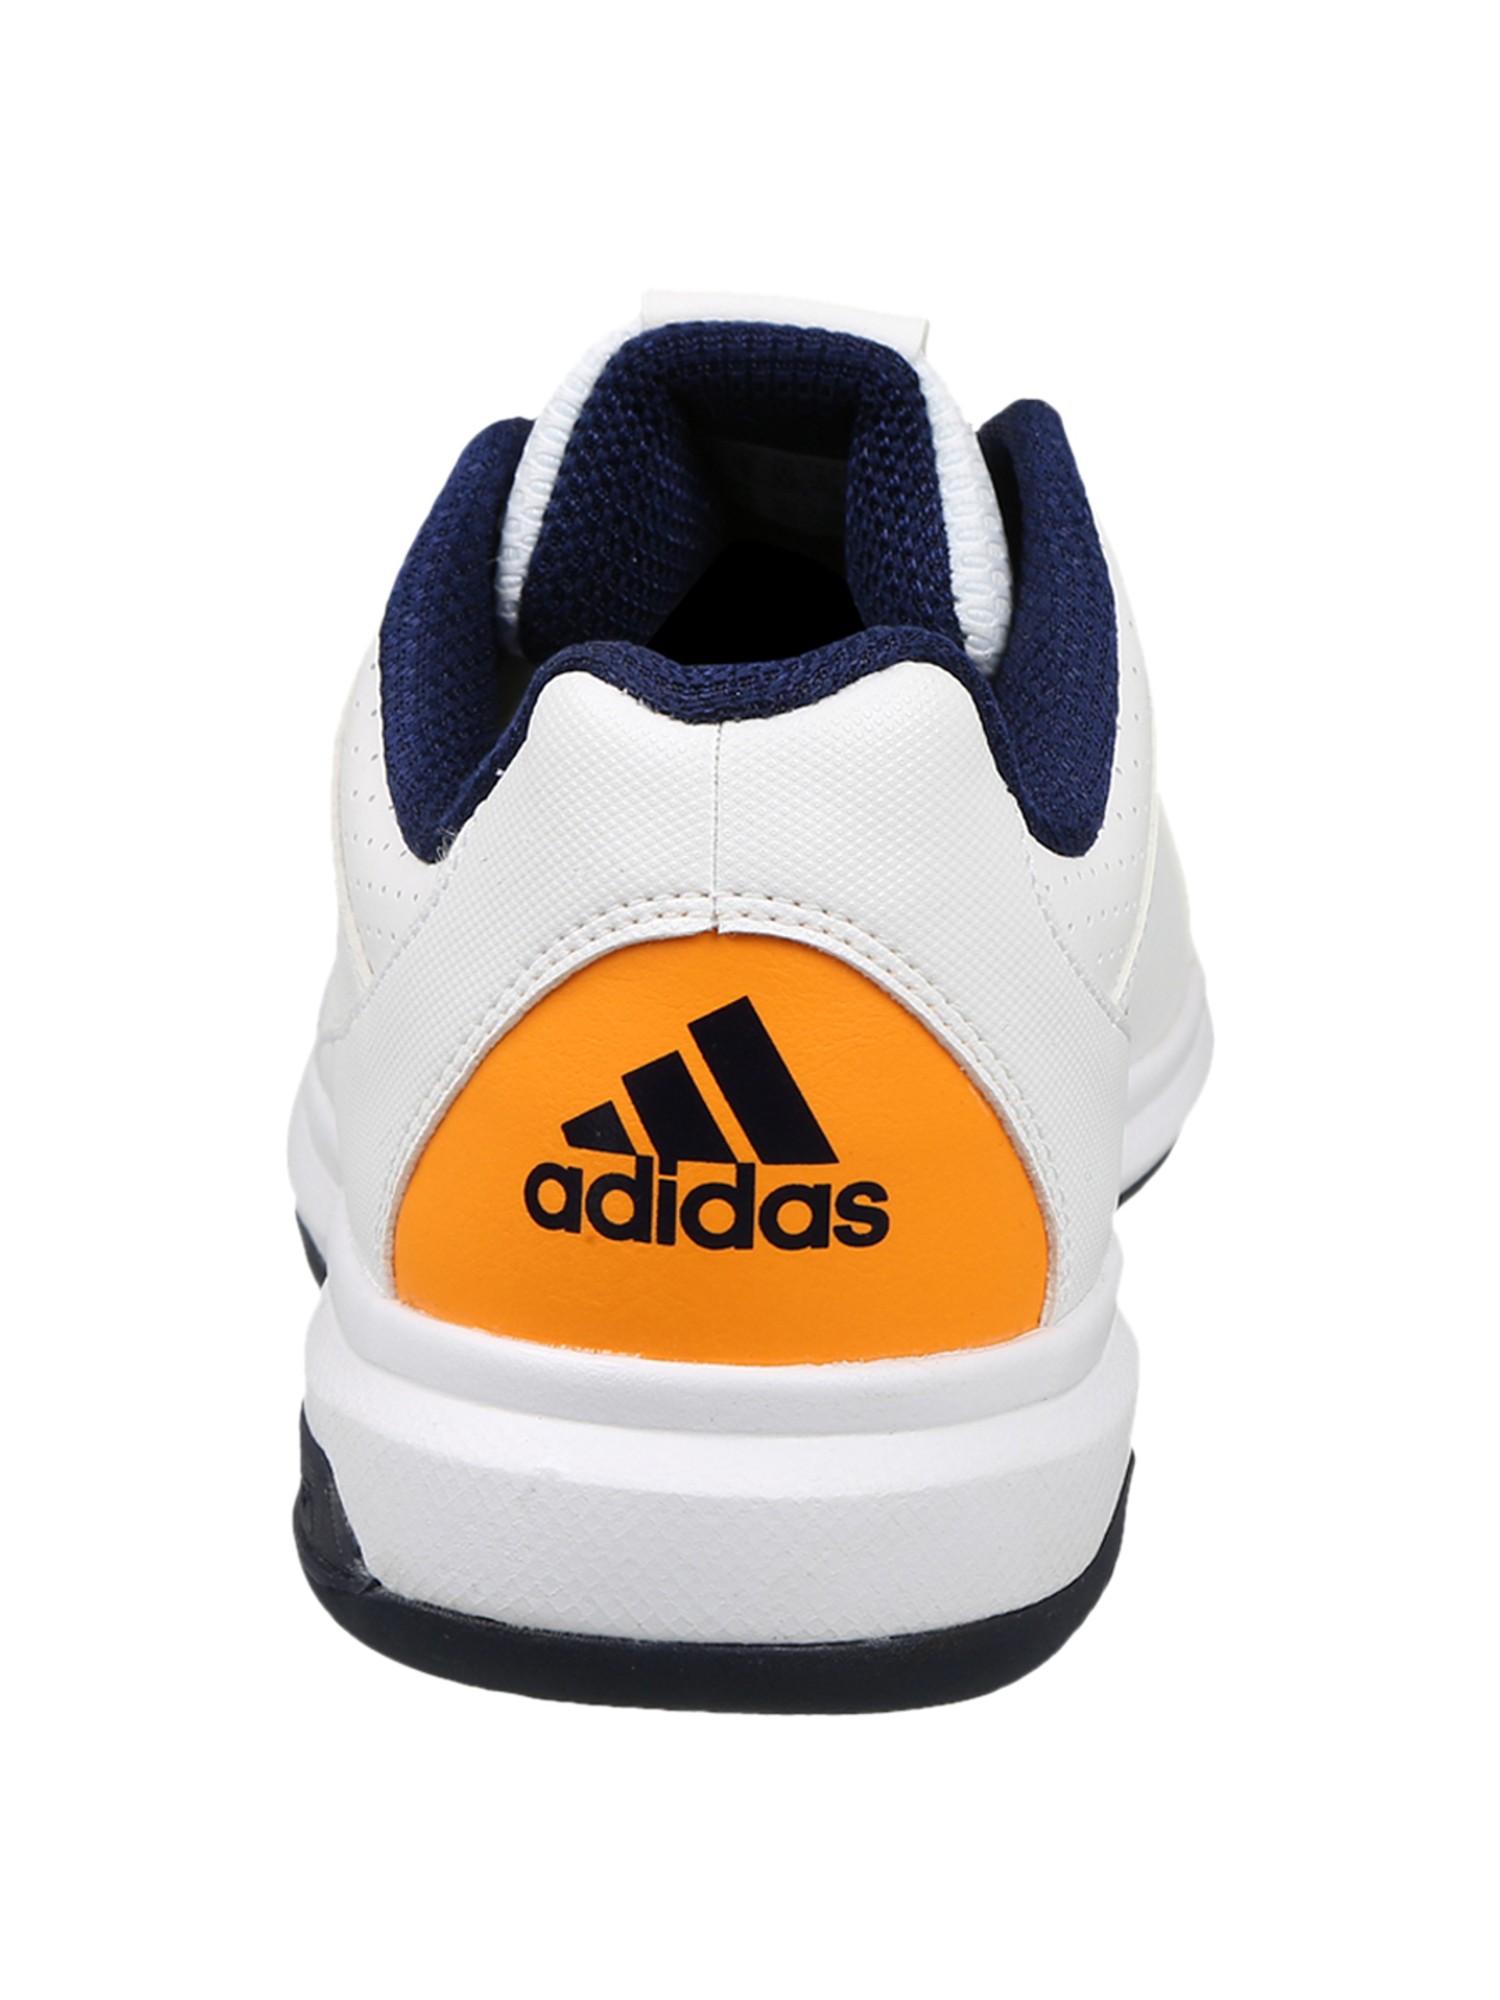 adidas wondrous ii tennis shoes